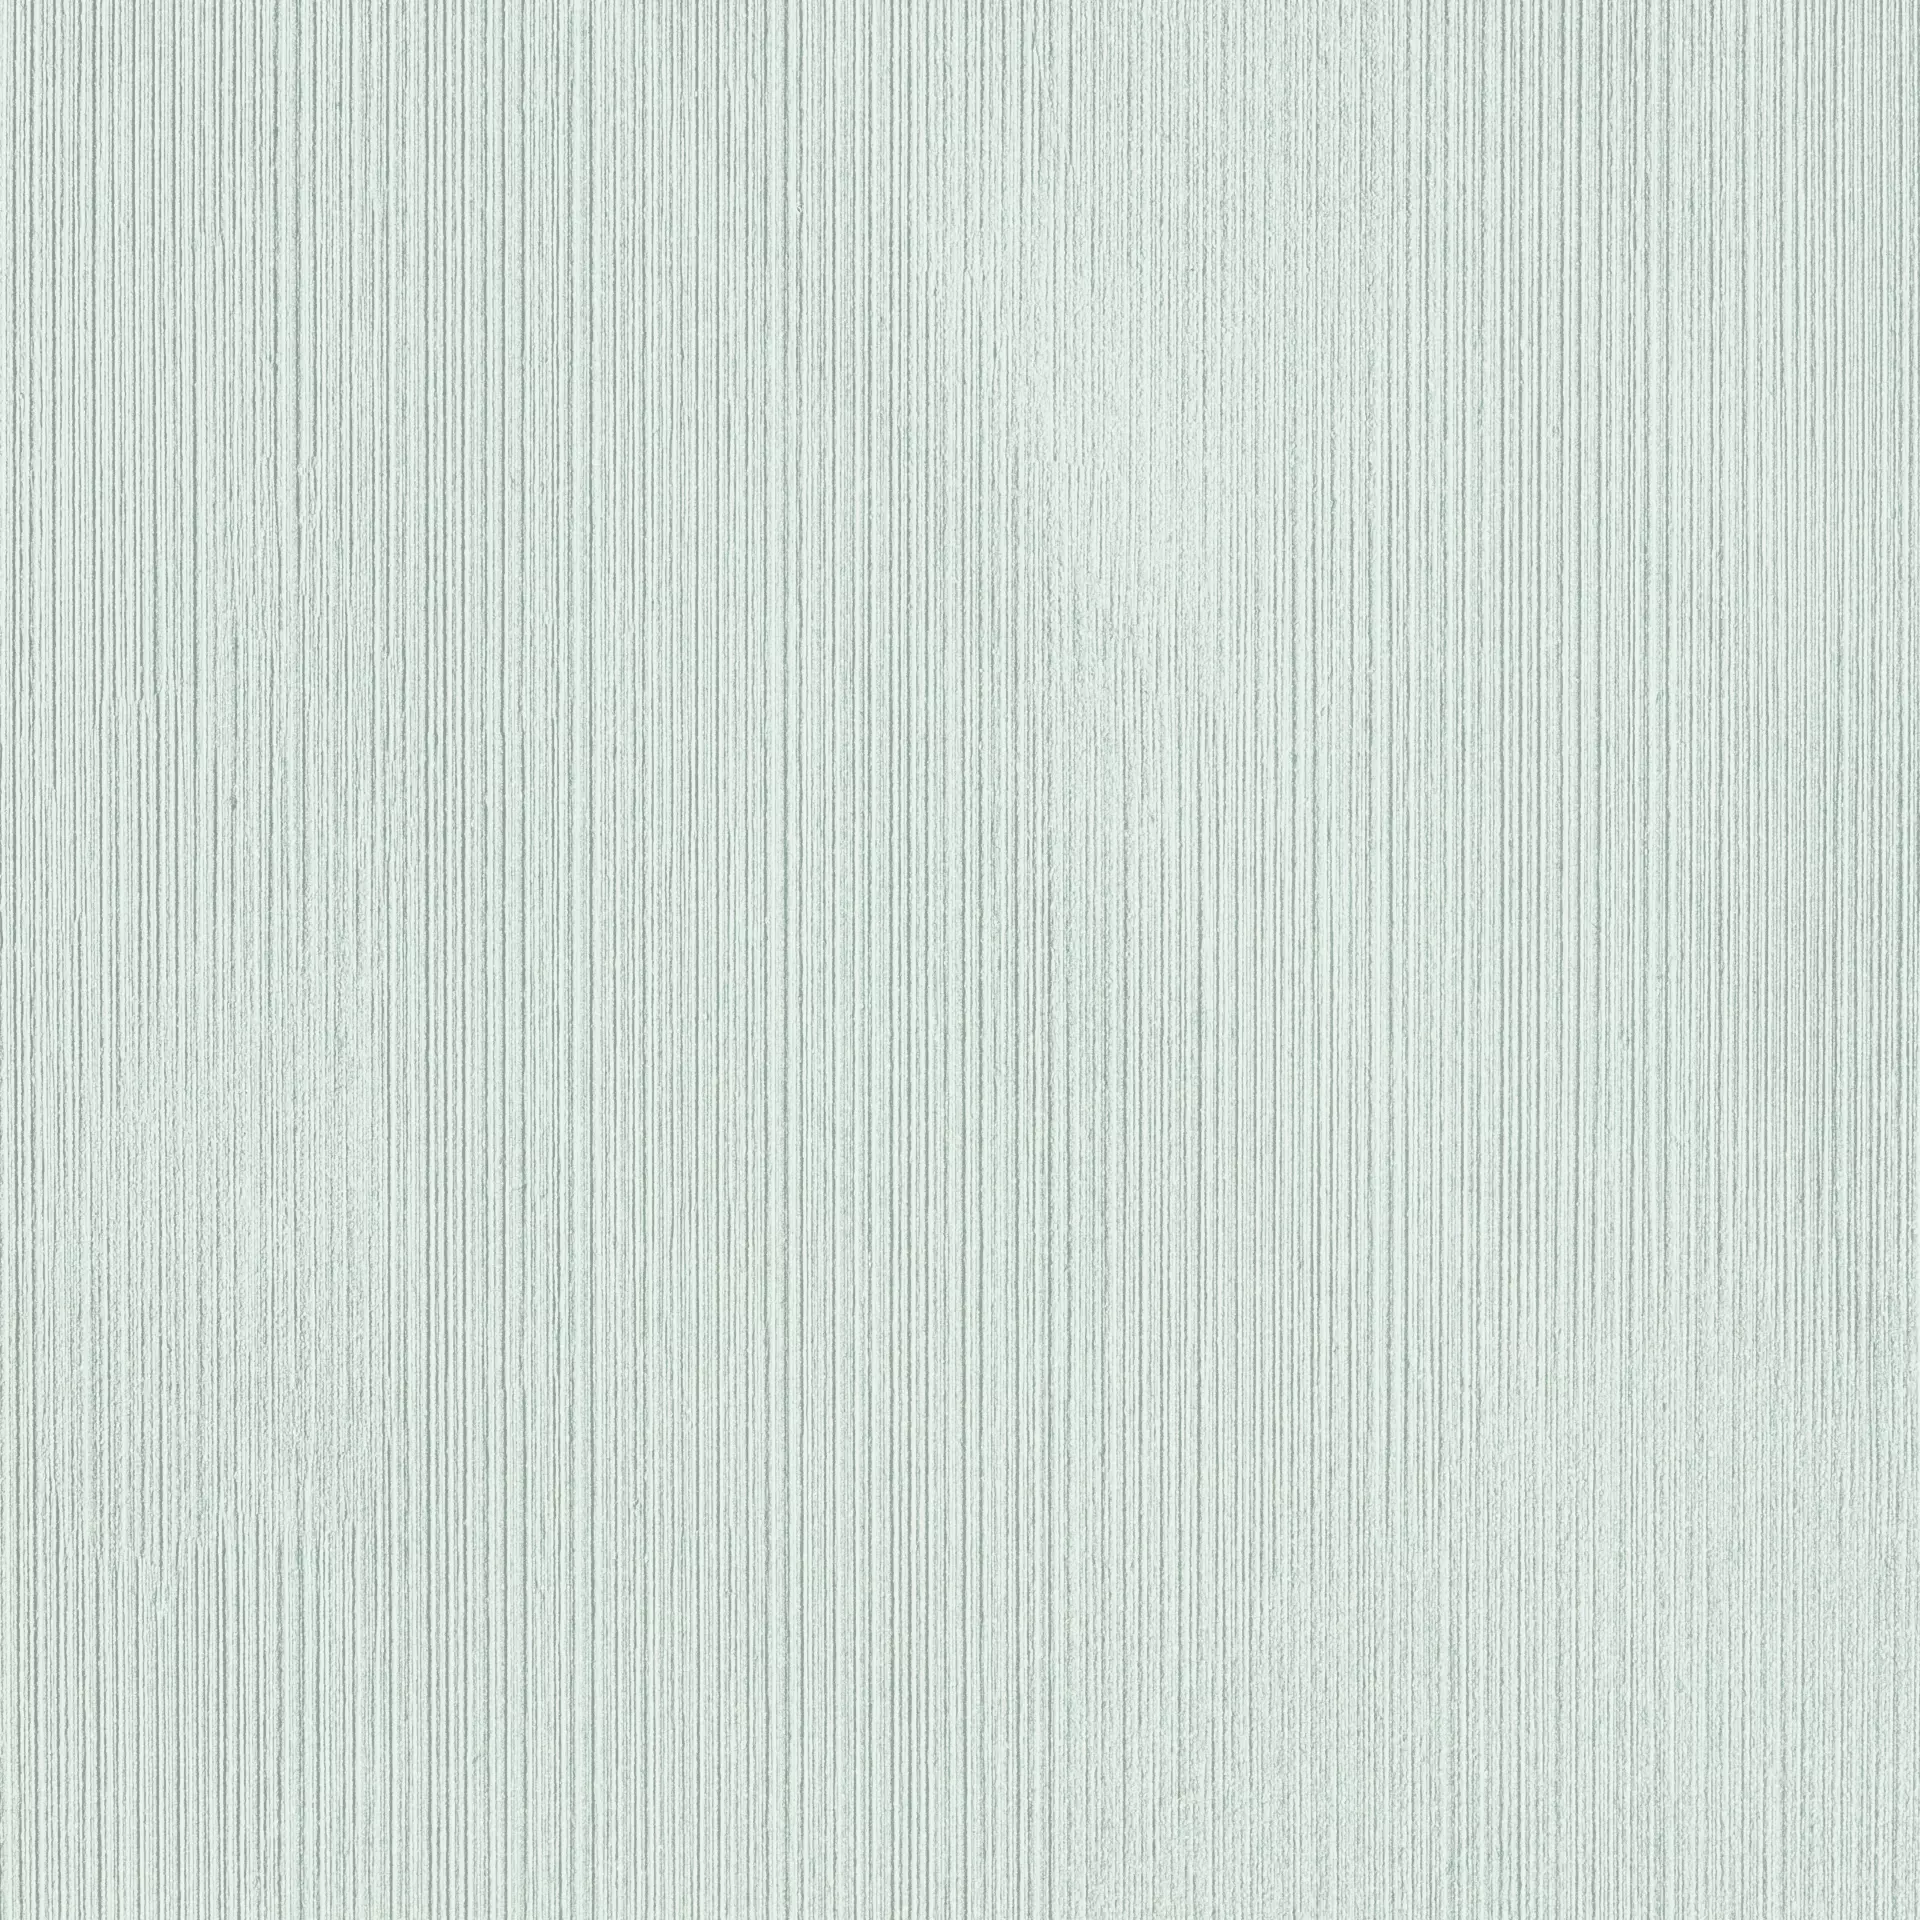 Rak Curton White Natural – Matt Decor Line A2D06PDCNWHEMMLN1R 60x60cm rectified 9mm